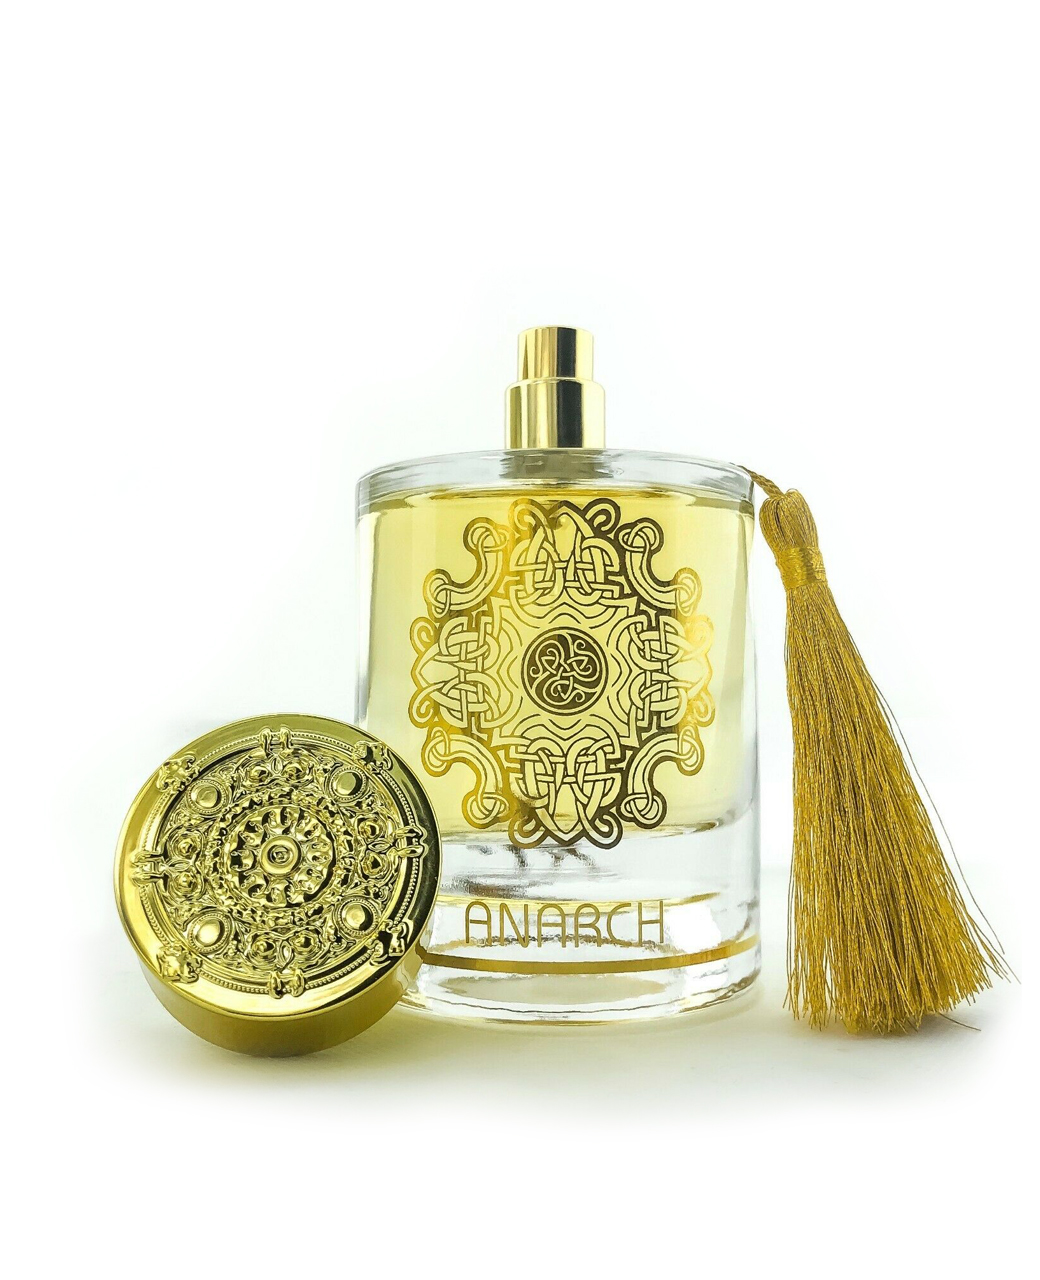 Anarch-100ml-perfume-My-Perfumes-arabian-oud-perfume-arabic-oudh-best-arabic-perfume-for-ladies-arabian-oud-perfume-uk-fragrance-best-arabian-oud-fragrance-lattafa-uk-4